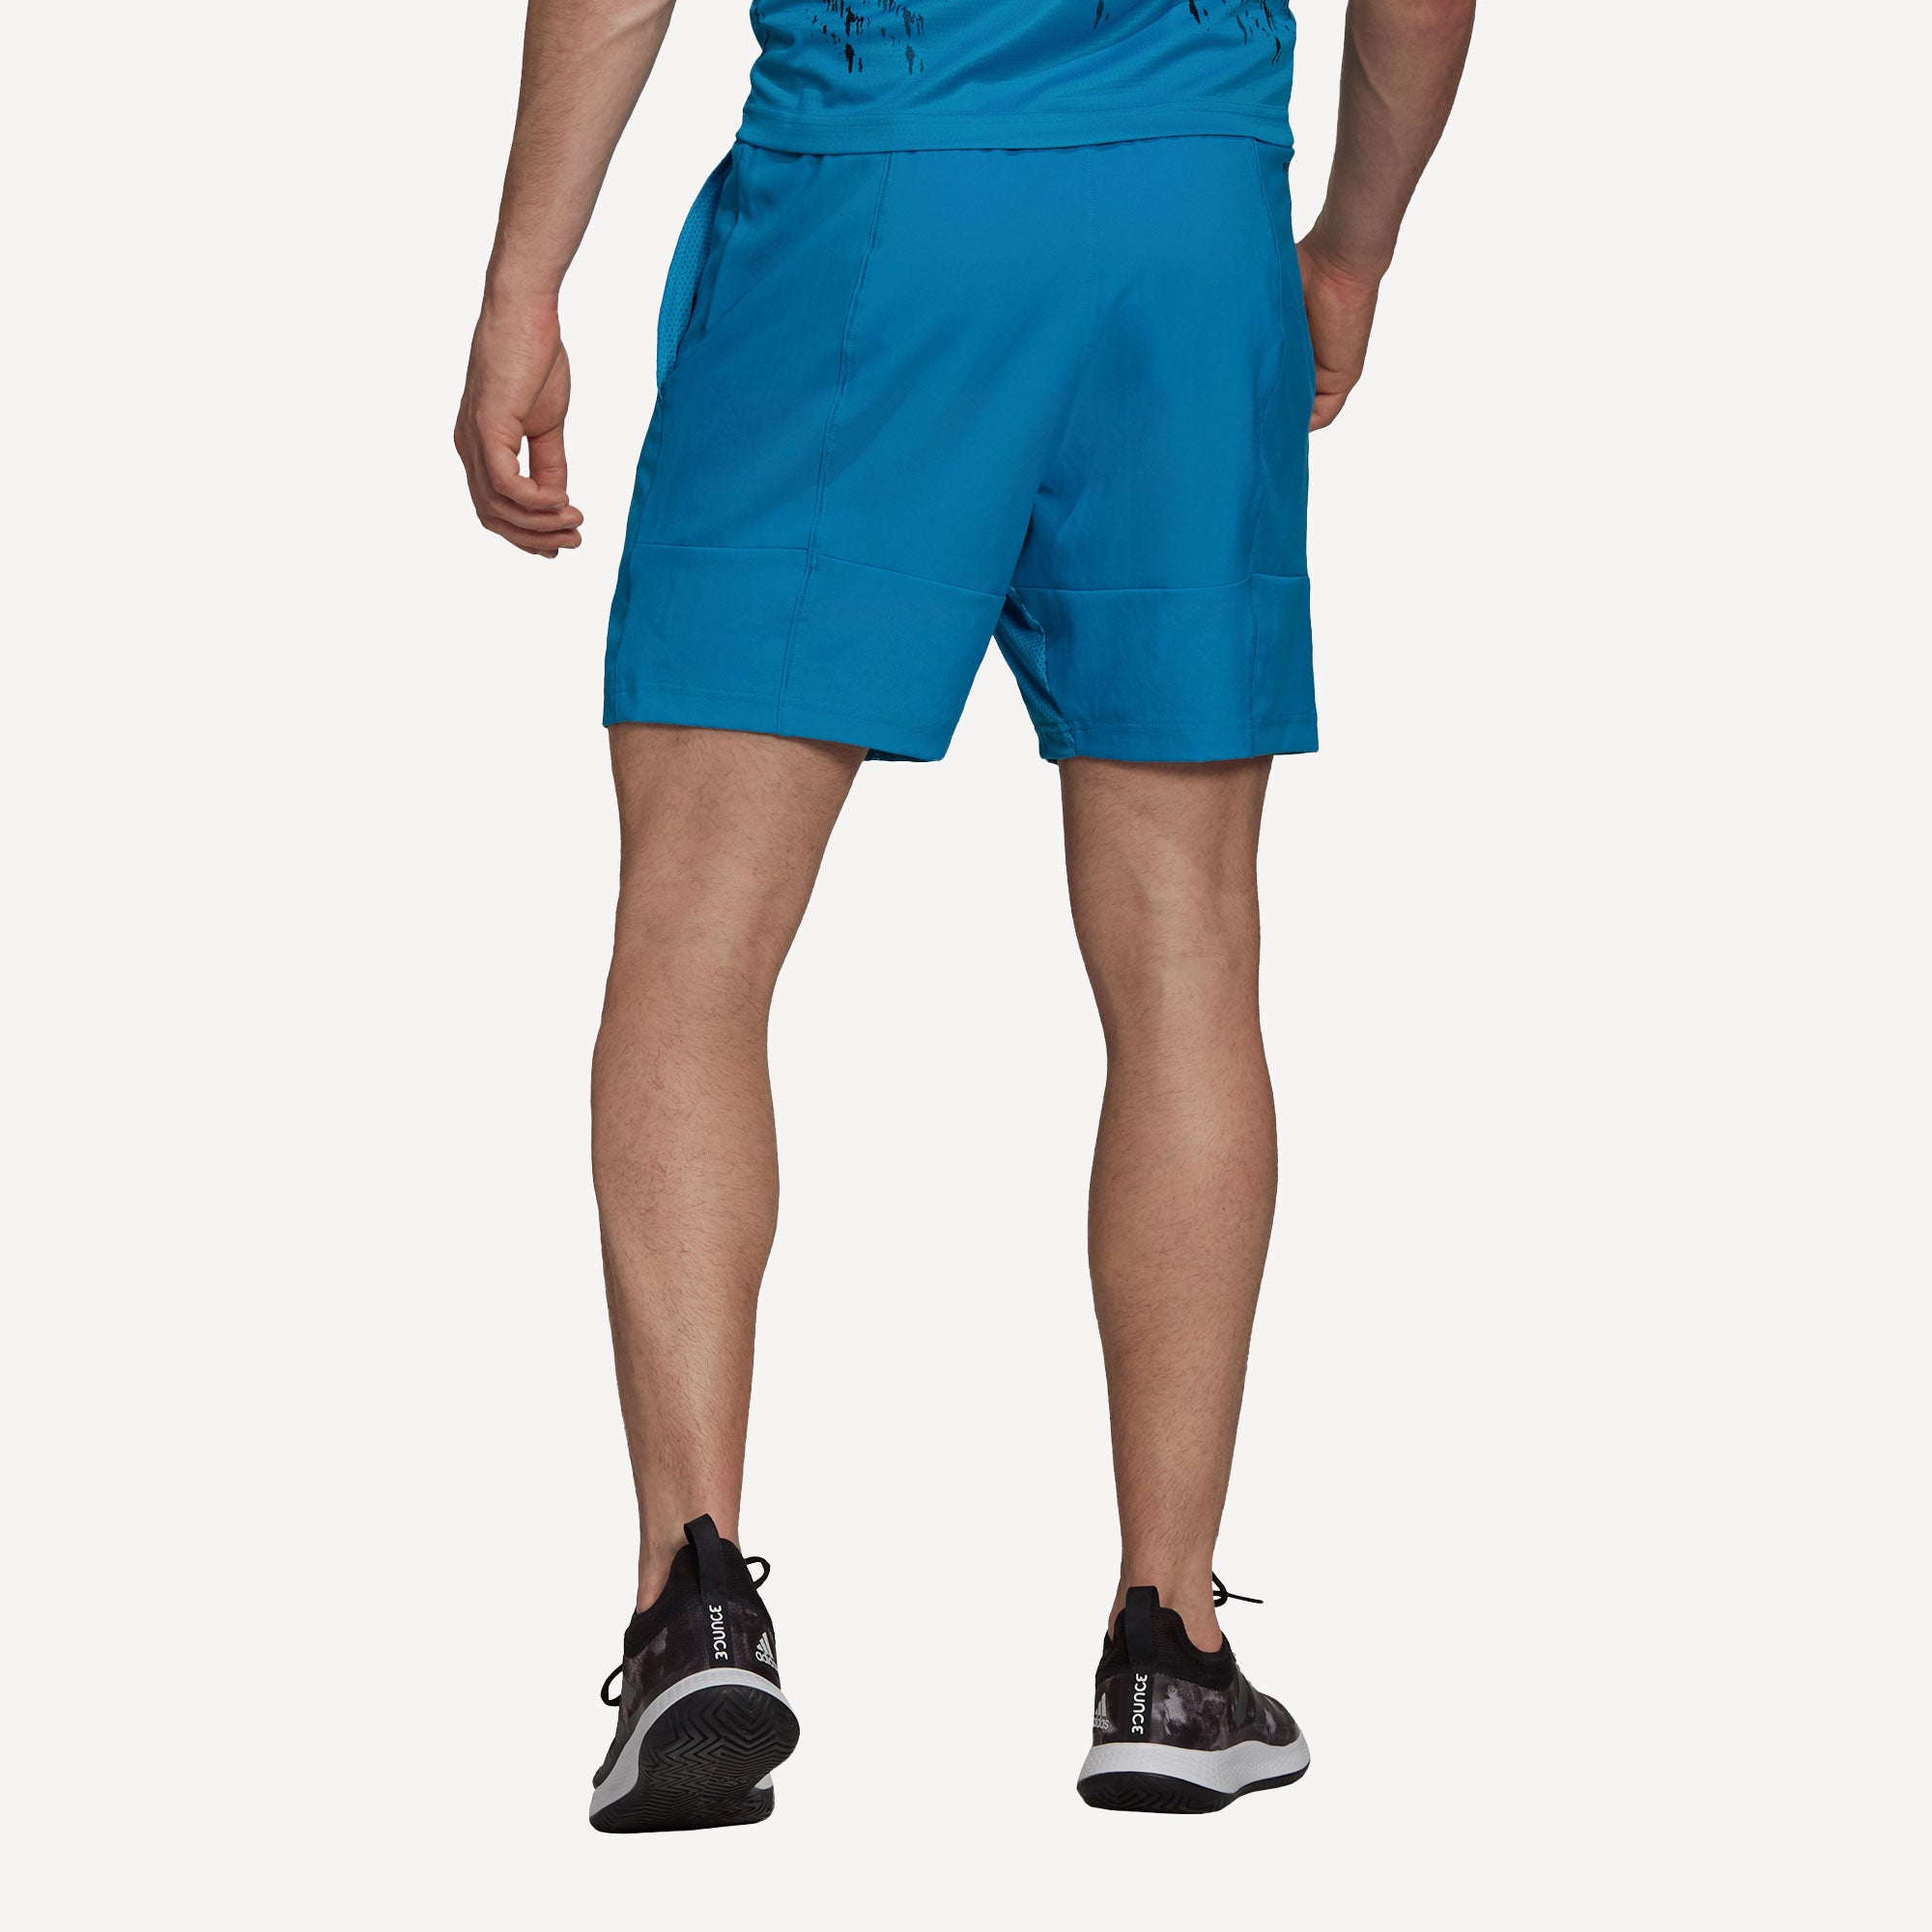 adidas Ergo Primeblue Men's 7-Inch Tennis Shorts Blue (2)